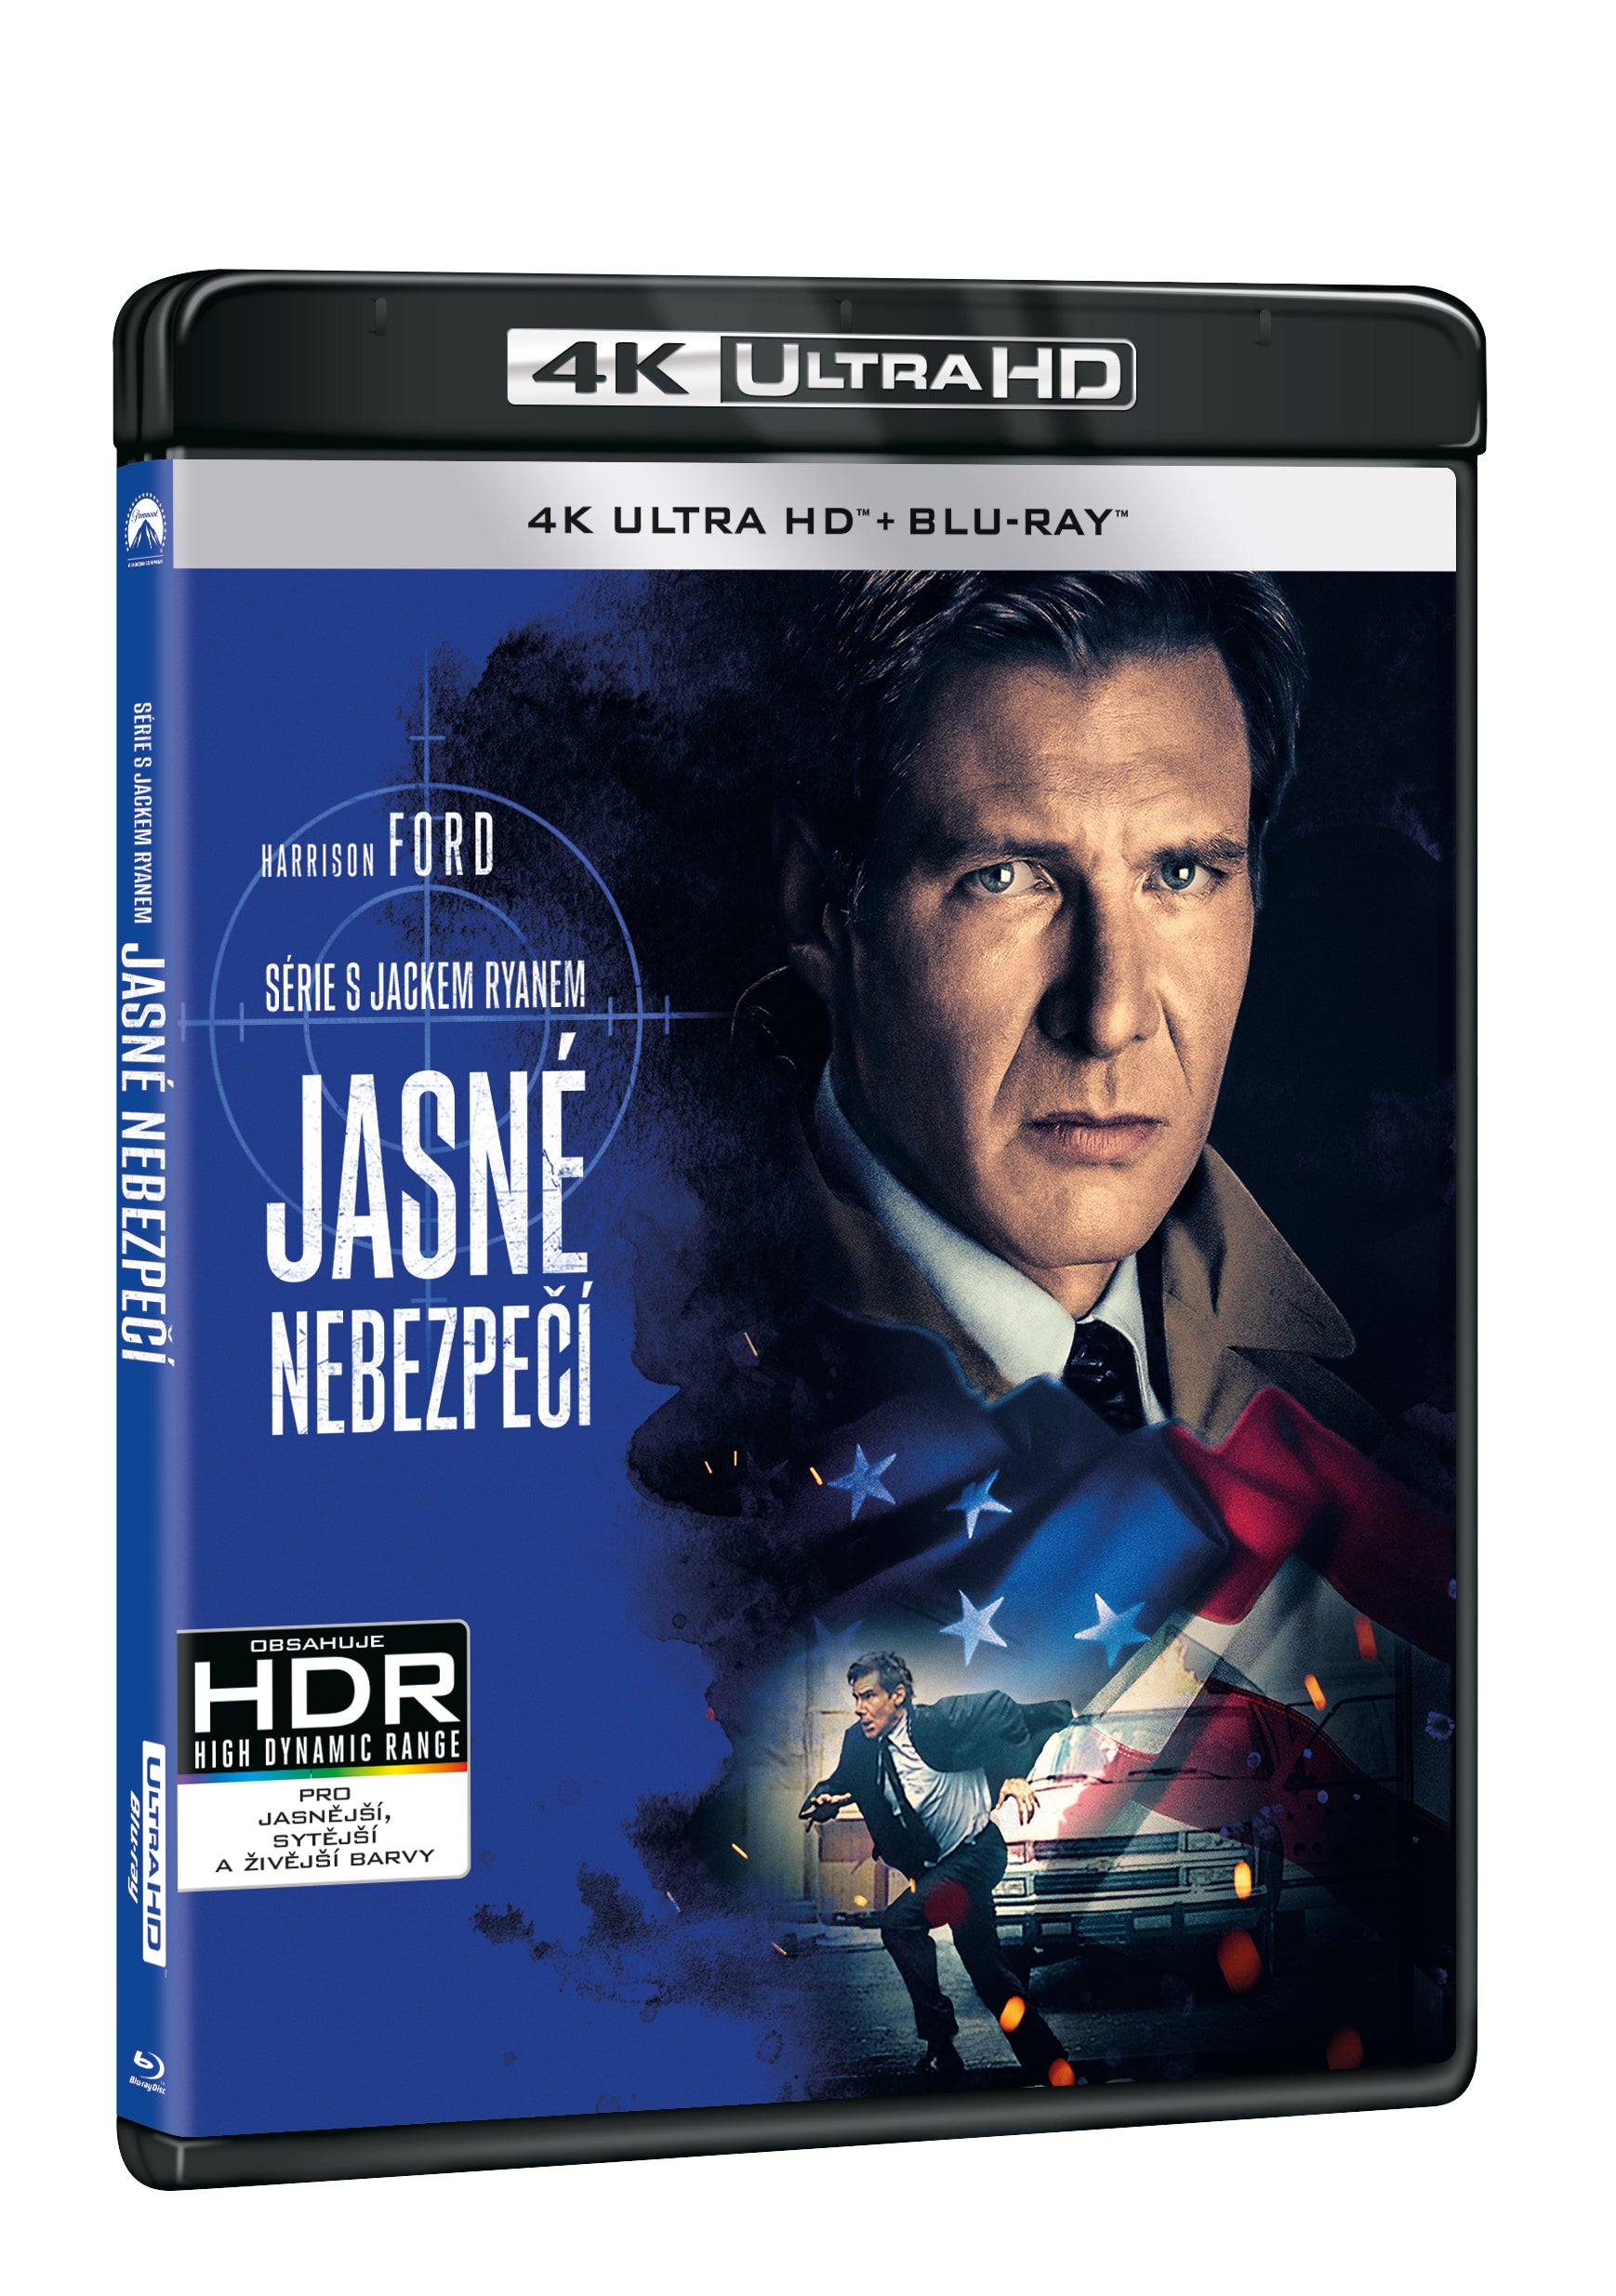 Jasne nebezpeci 2BD (UHD+BD) / Clear and Present Danger - Czech version